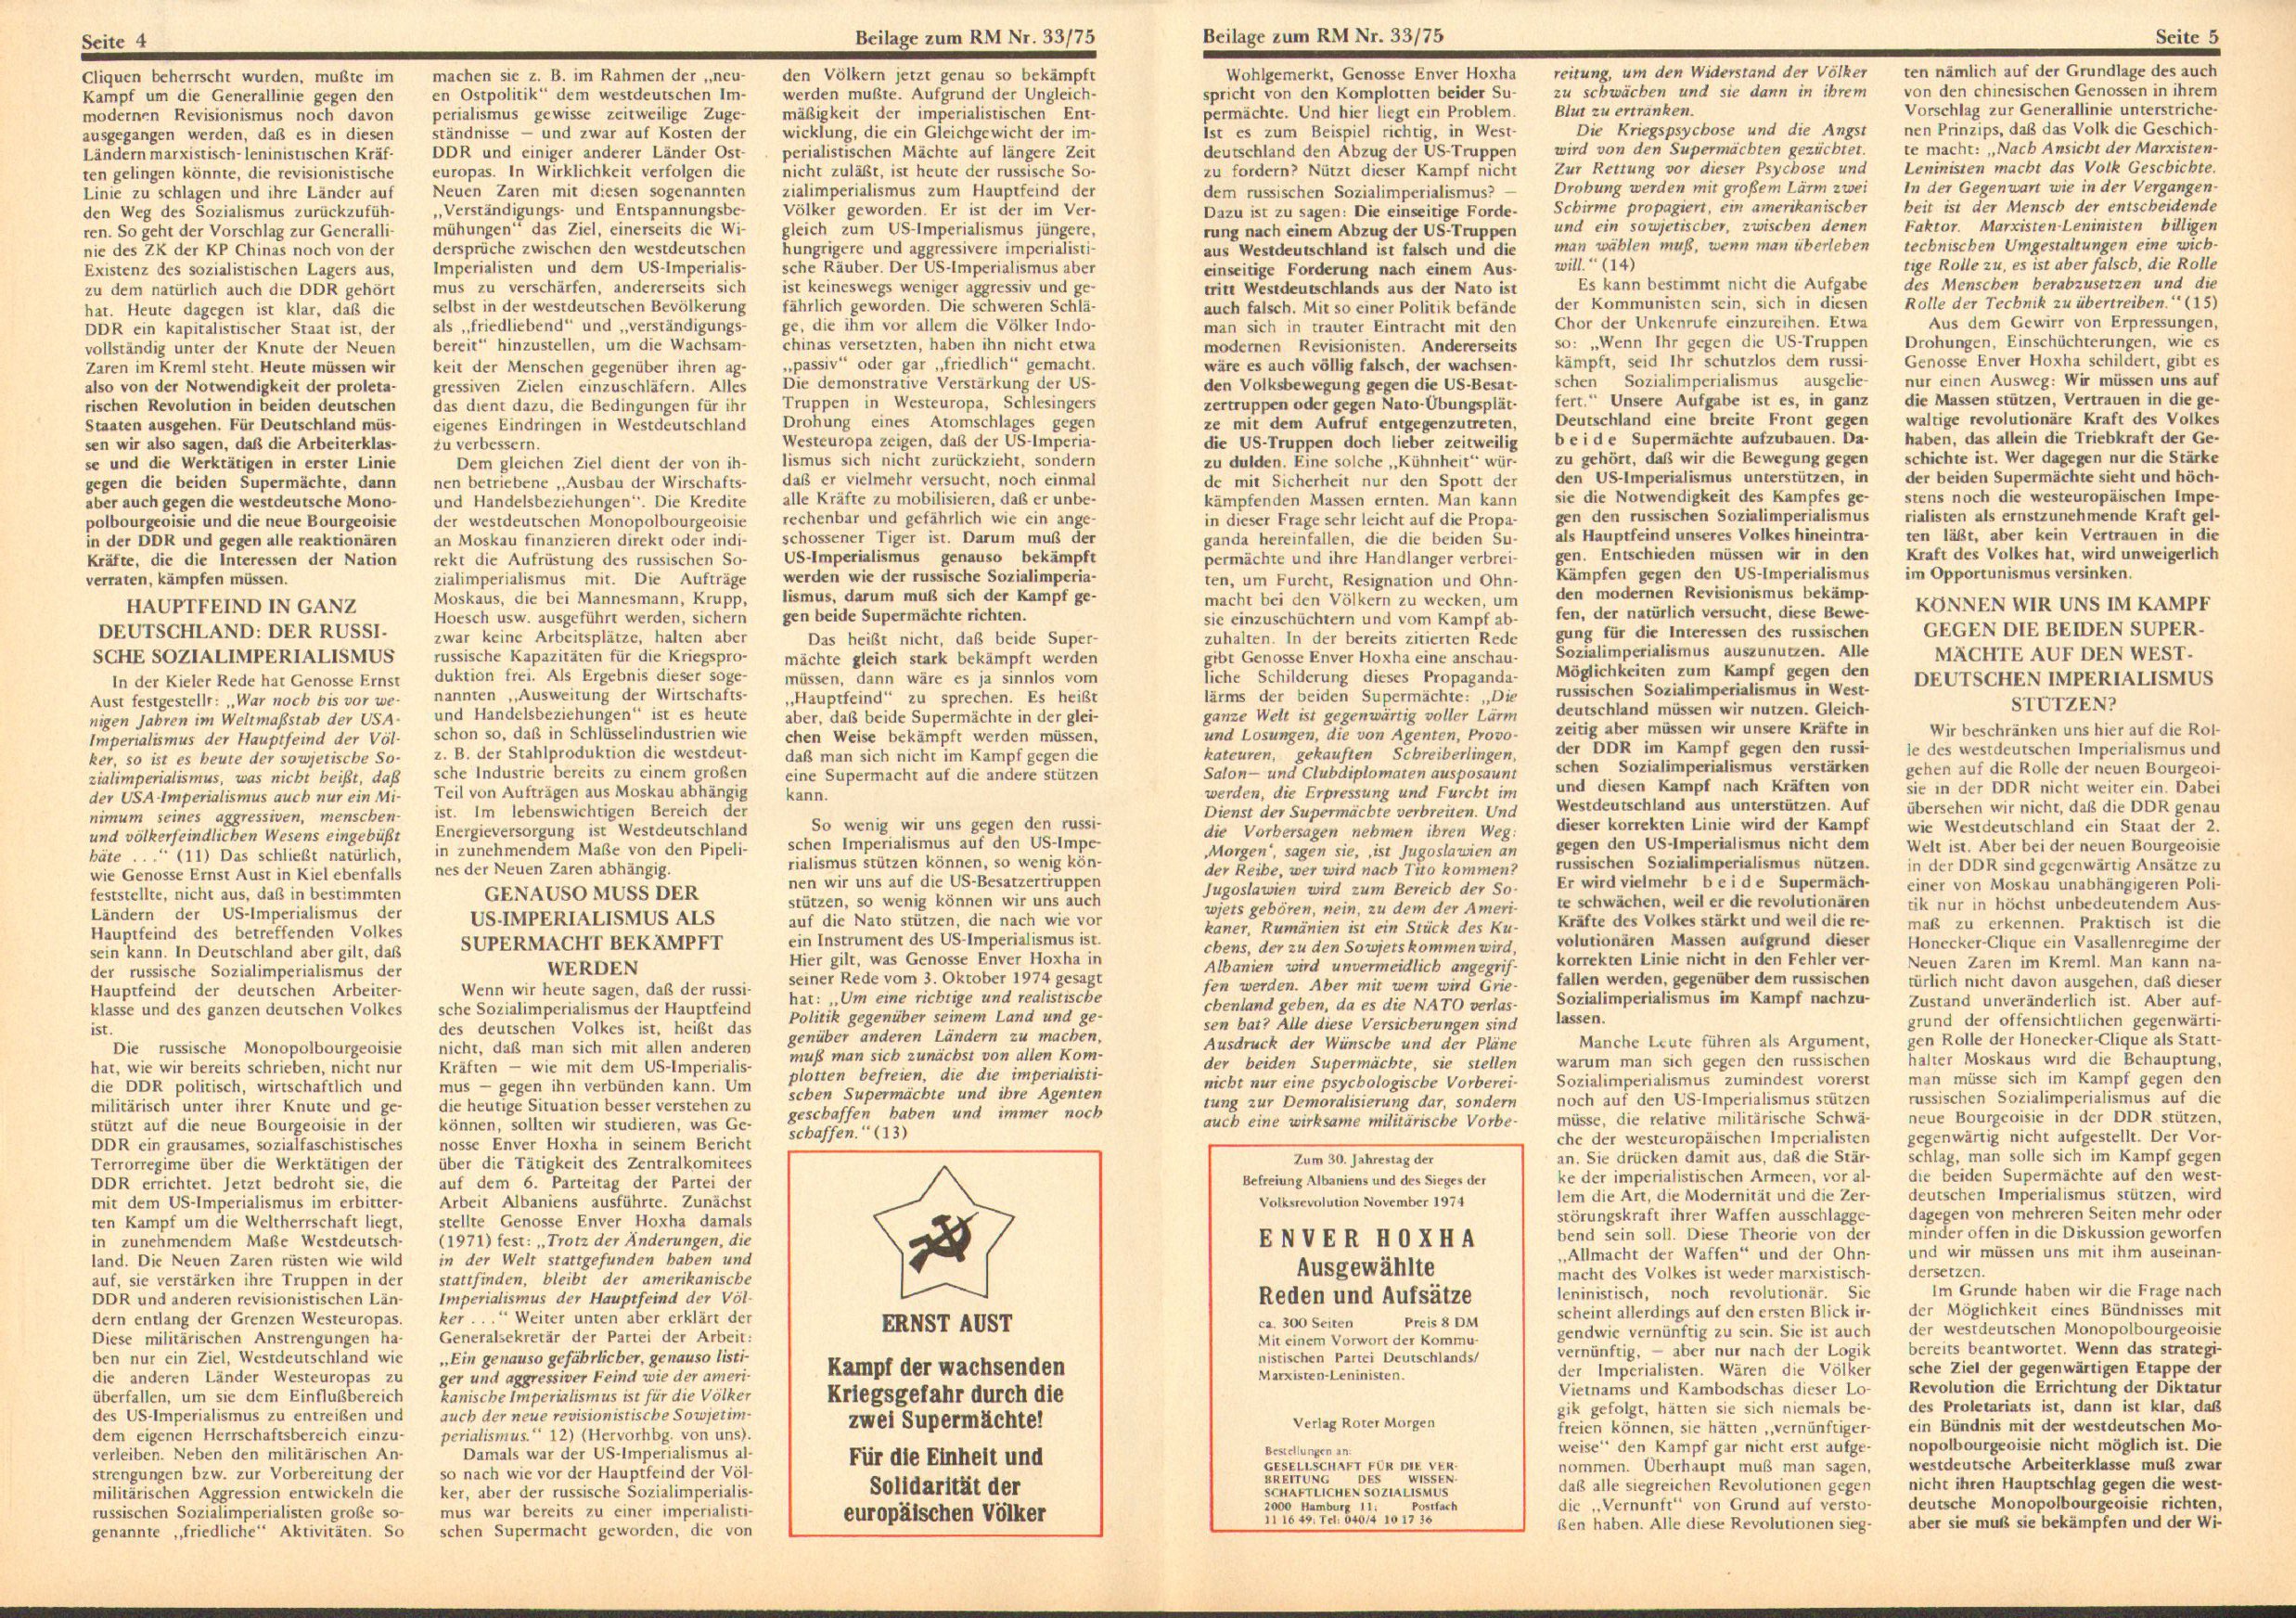 Roter Morgen, 9. Jg., 16. August 1975, Nr. 33, Beilage, Seite 